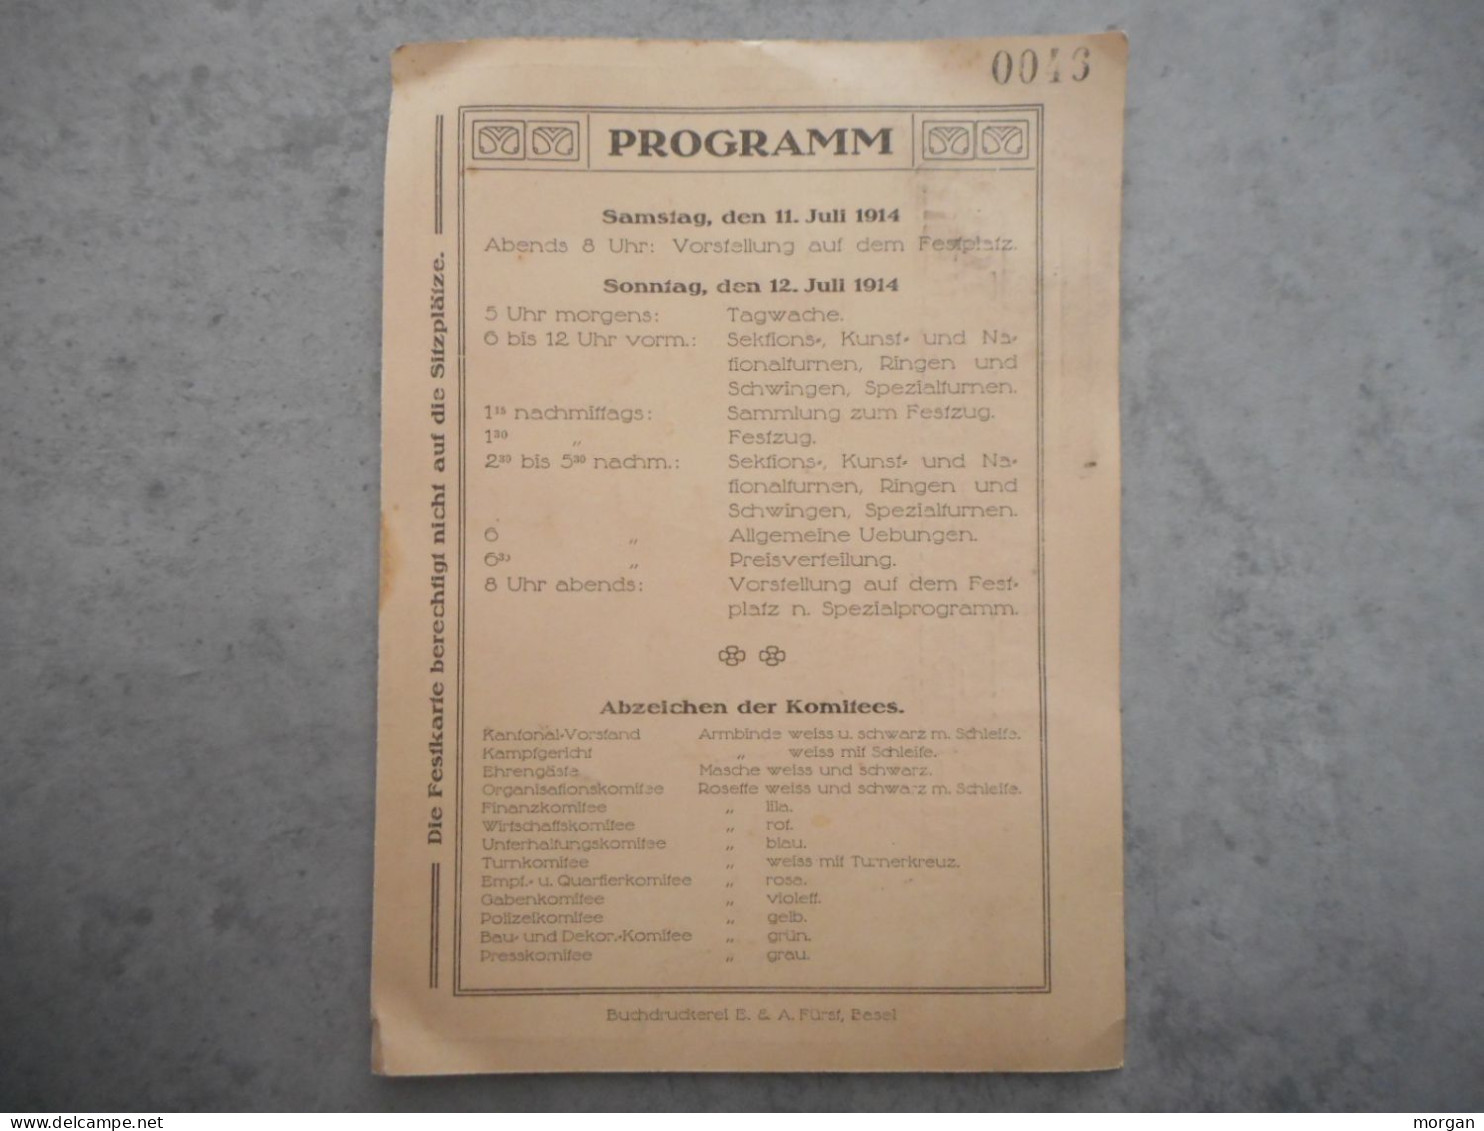 SUISSE, BALE, BASEL, 1914, PROGRAMME BASELSTADTISCHES KANTONALTURNFEST, BASEL HORBURG JULI 1914, FESTKARTE - Manifesti